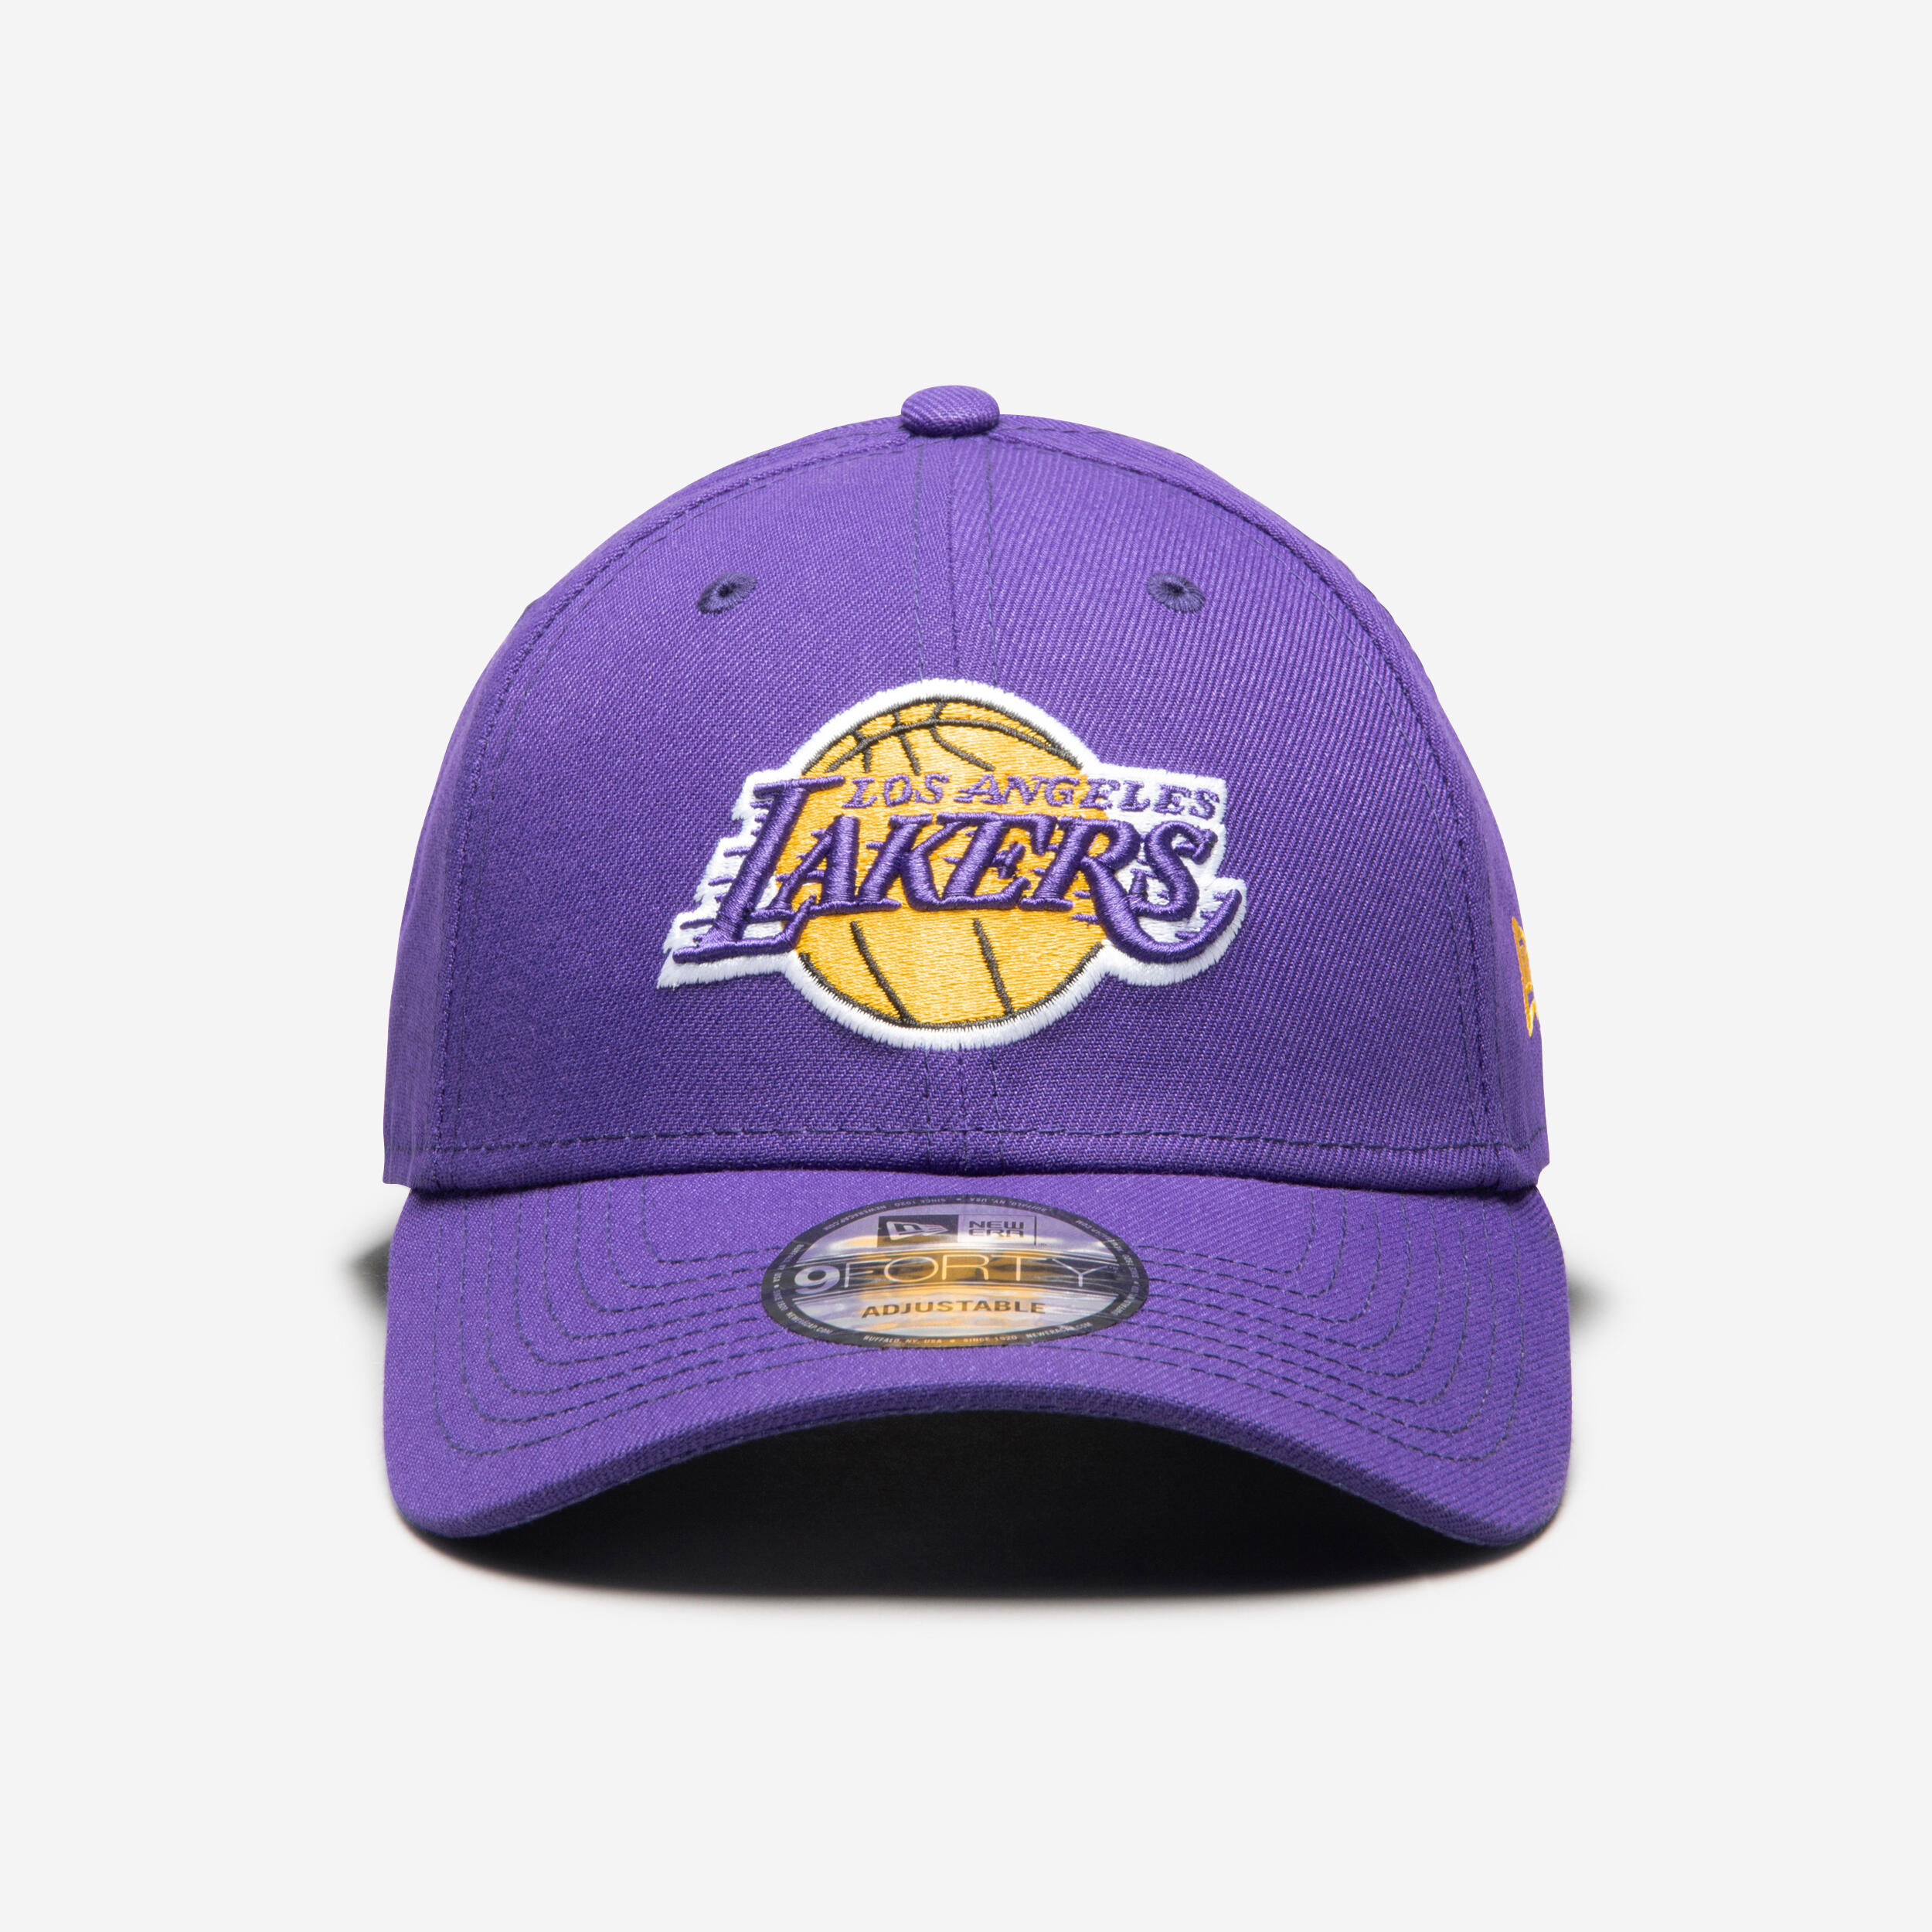 NEW ERA Men's/Women's Basketball Cap NBA - Los Angeles Lakers/Purple